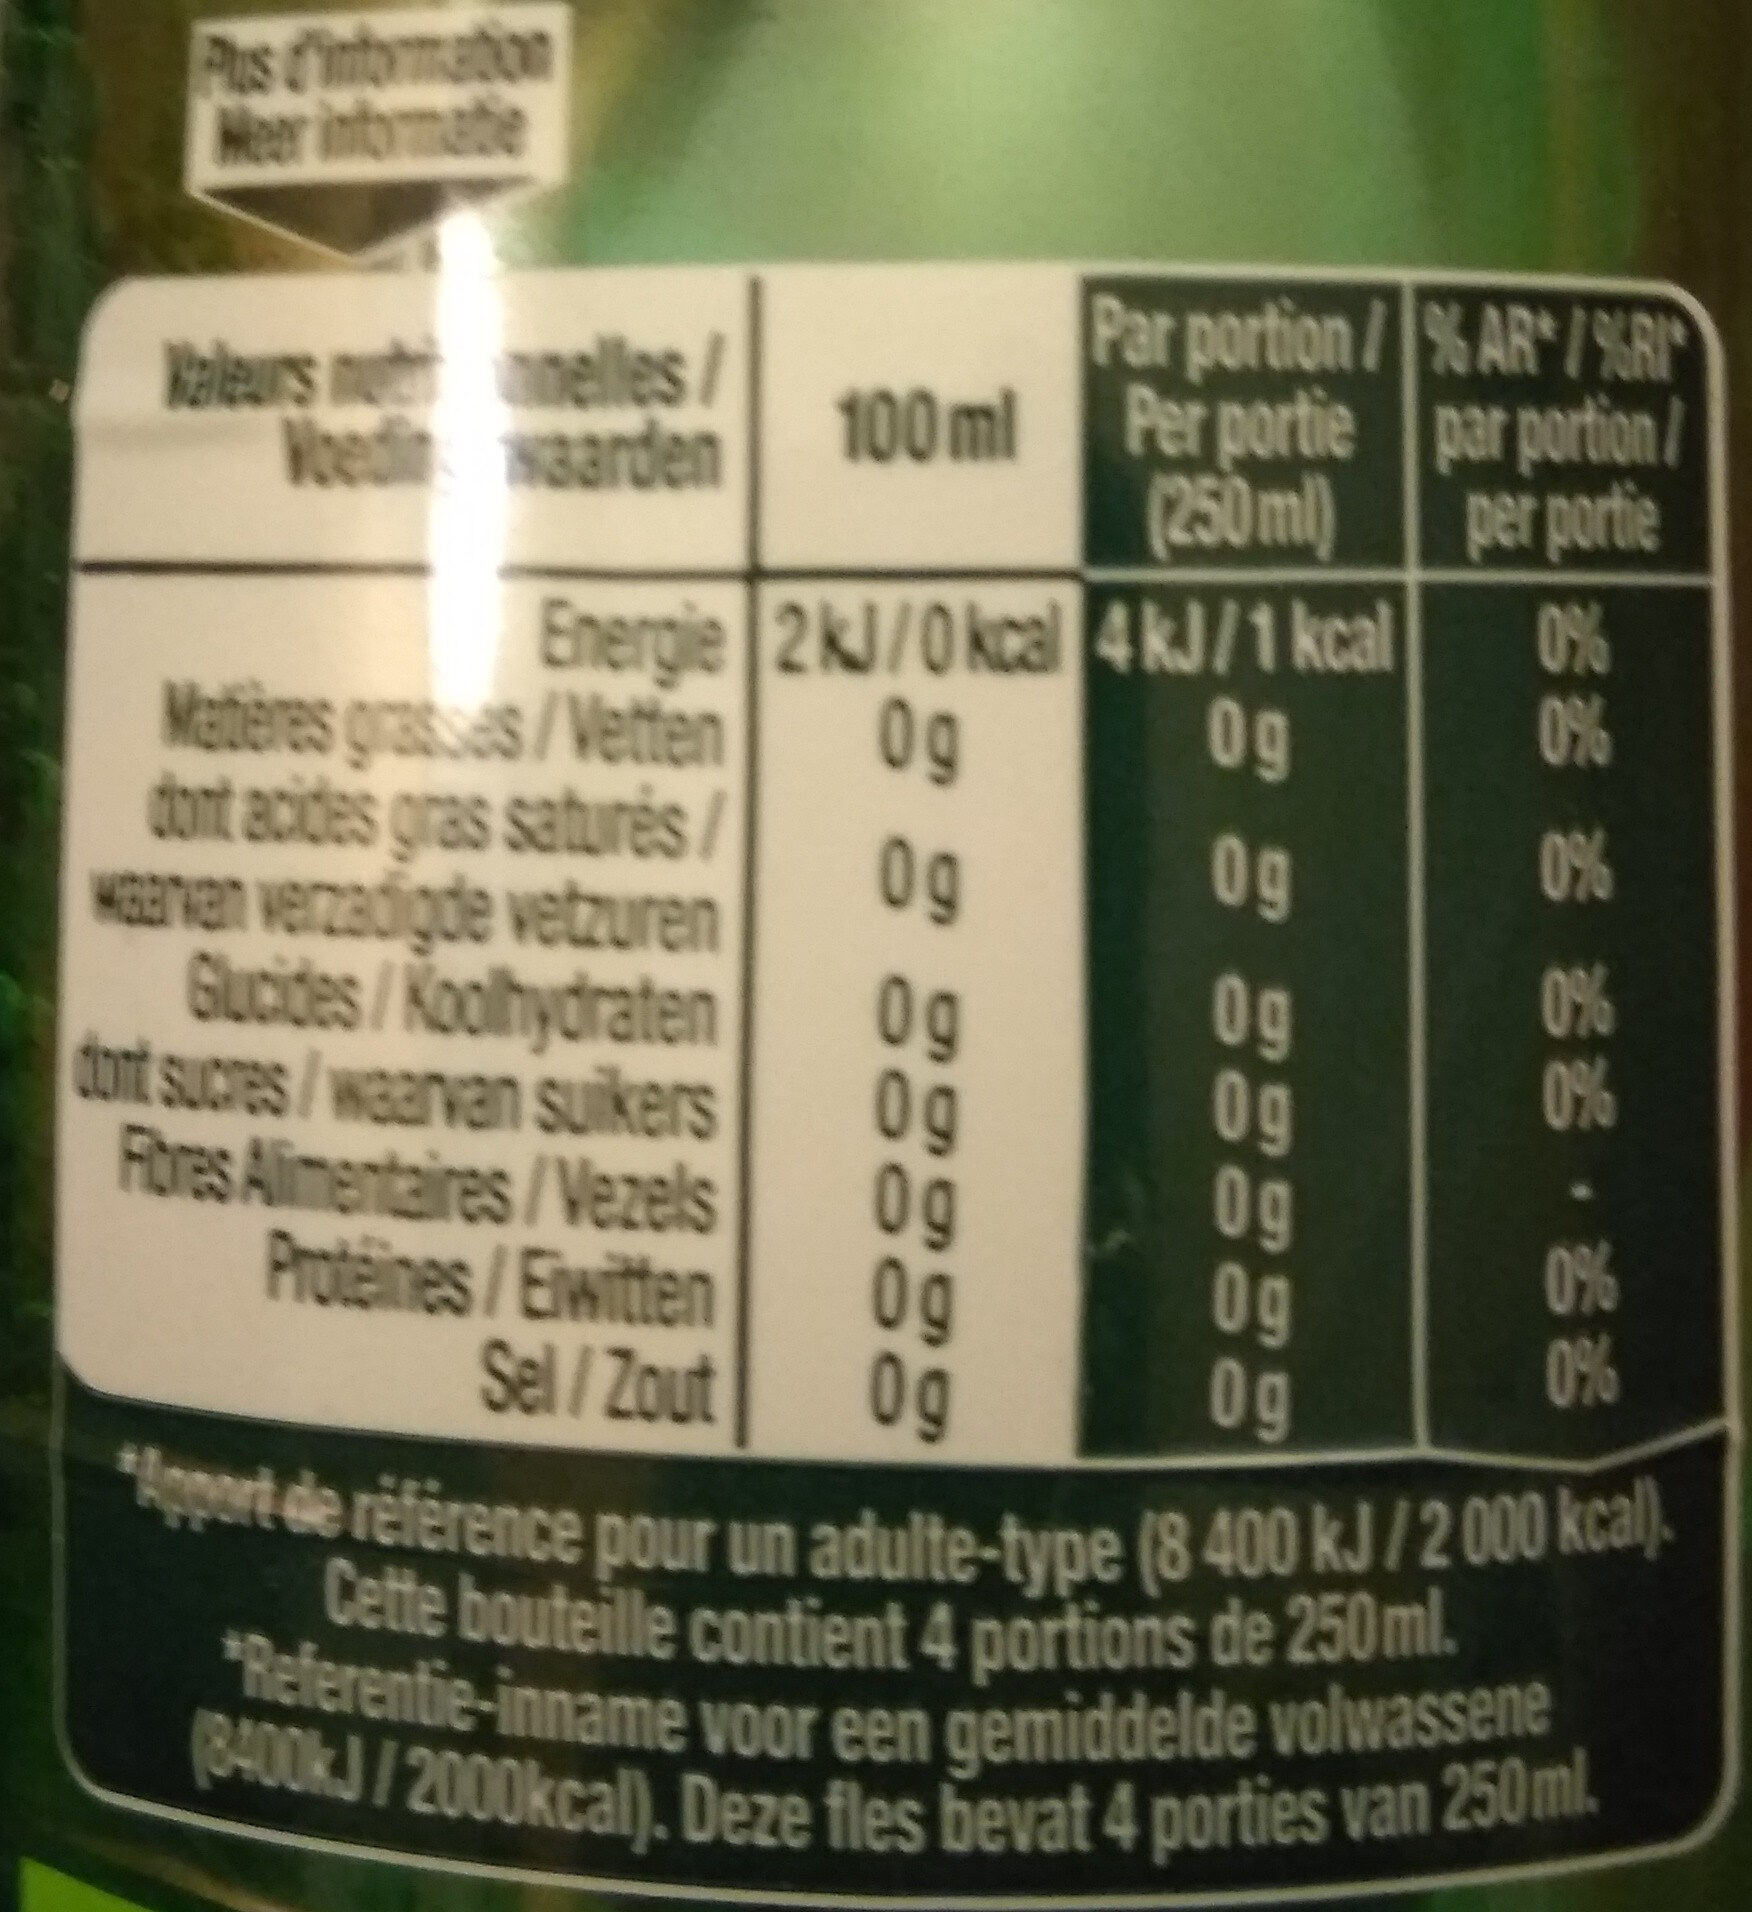 Perrier citron vert - Información nutricional - fr